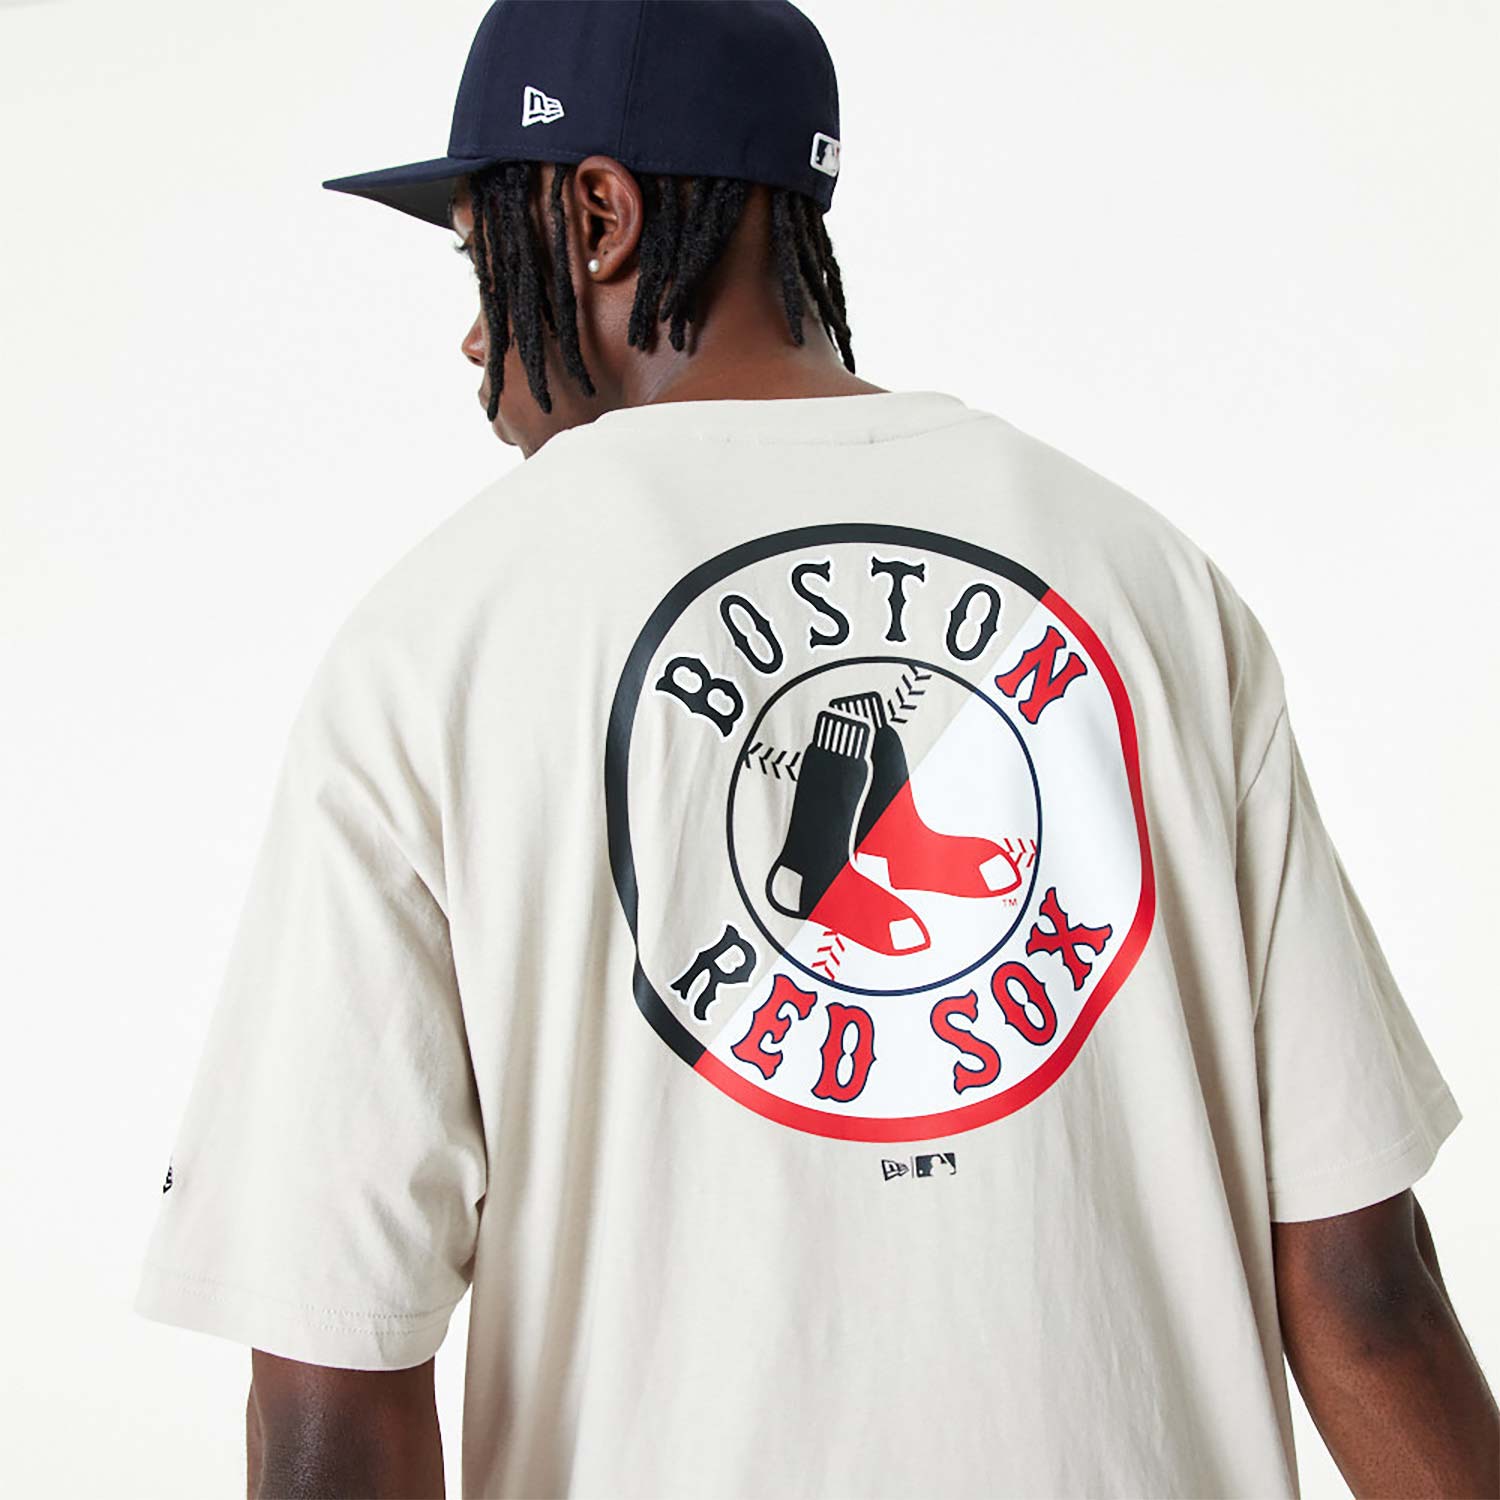 Official New Era Boston Red Sox MLB Left Chest Team Logo Navy T-Shirt  B4489_253 B4489_253